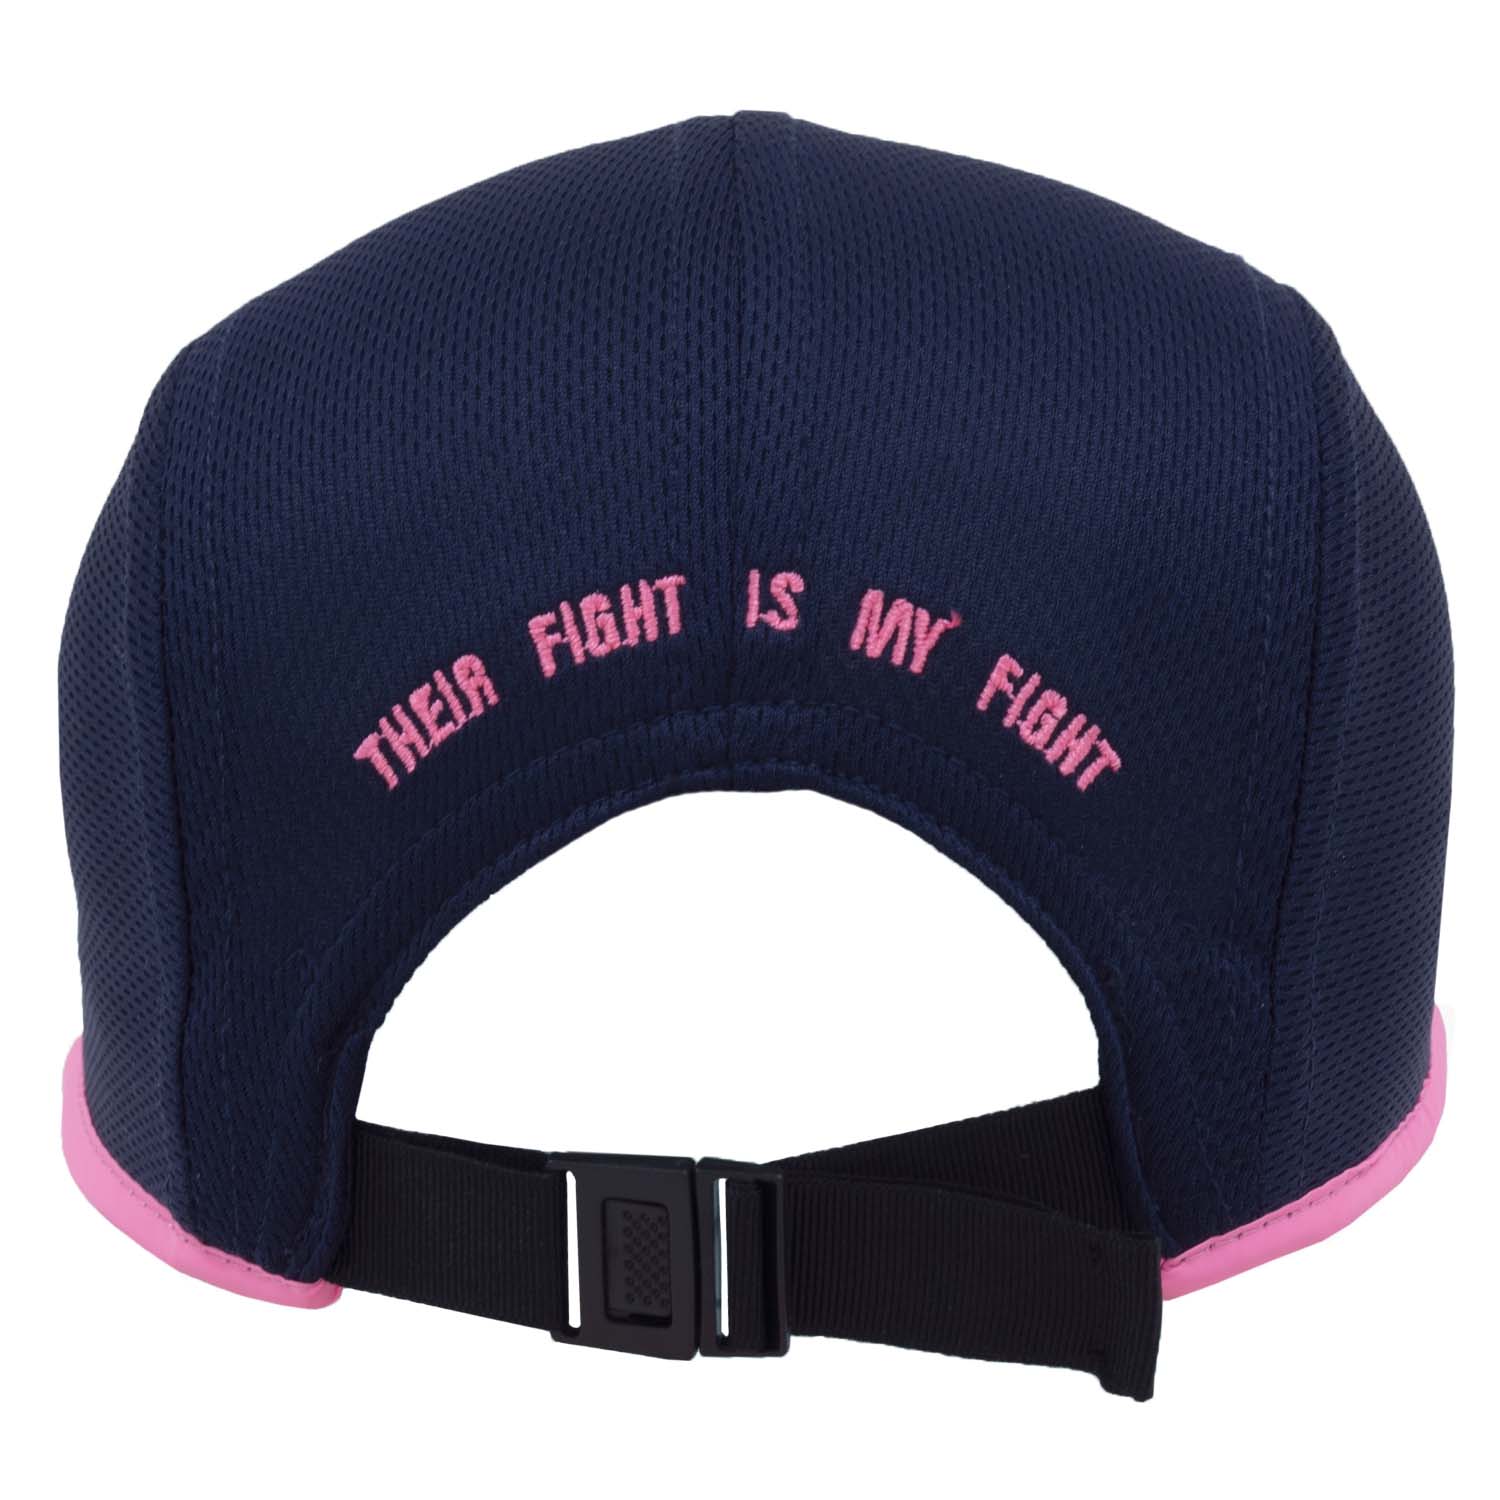 BCA Navy/Pink Race Hat